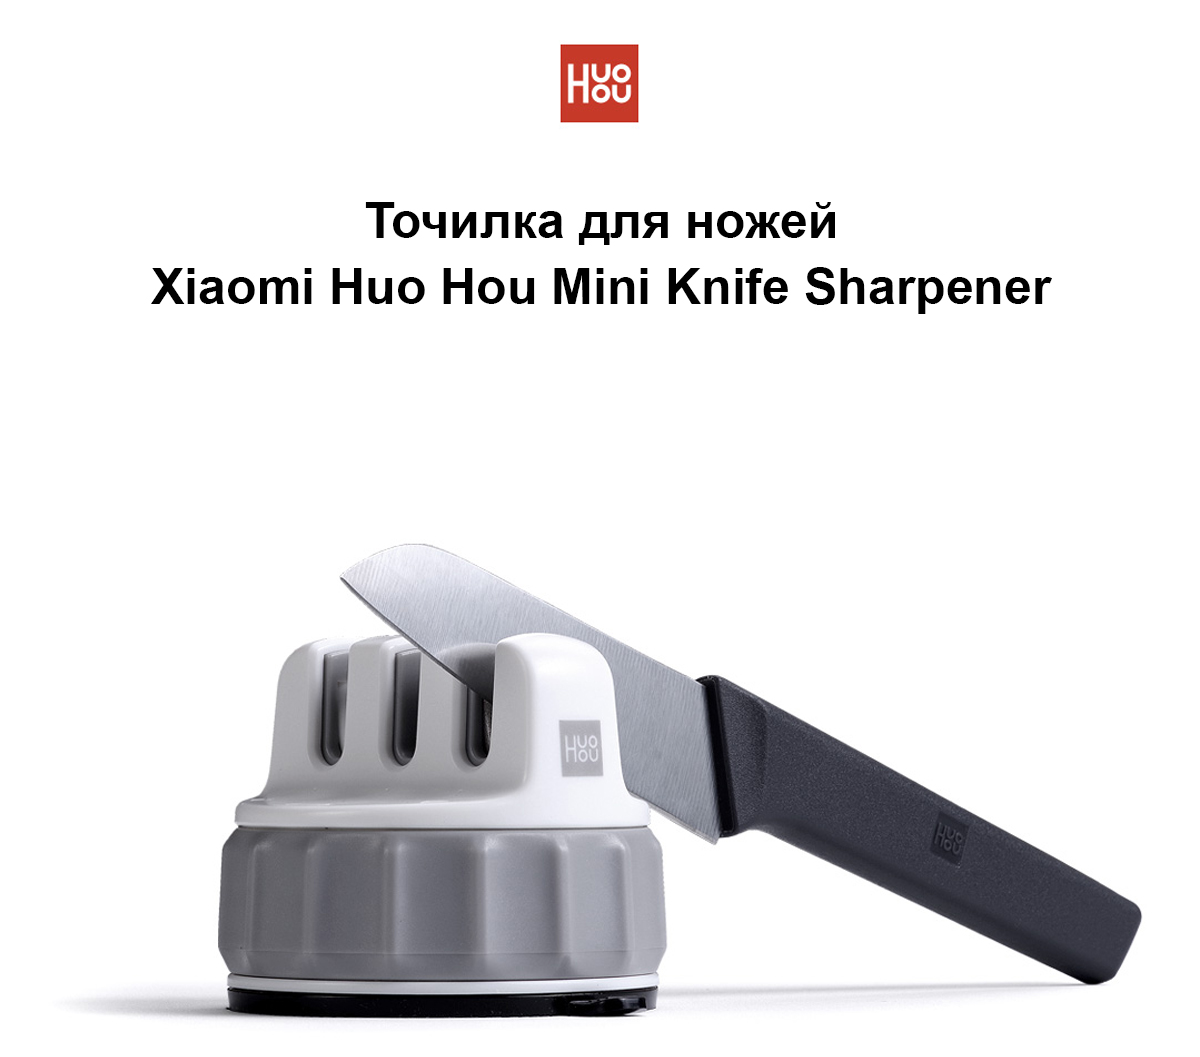 Точилка для ножей Xiaomi Huo Hou Mini Knife Sharpener (HU0066)